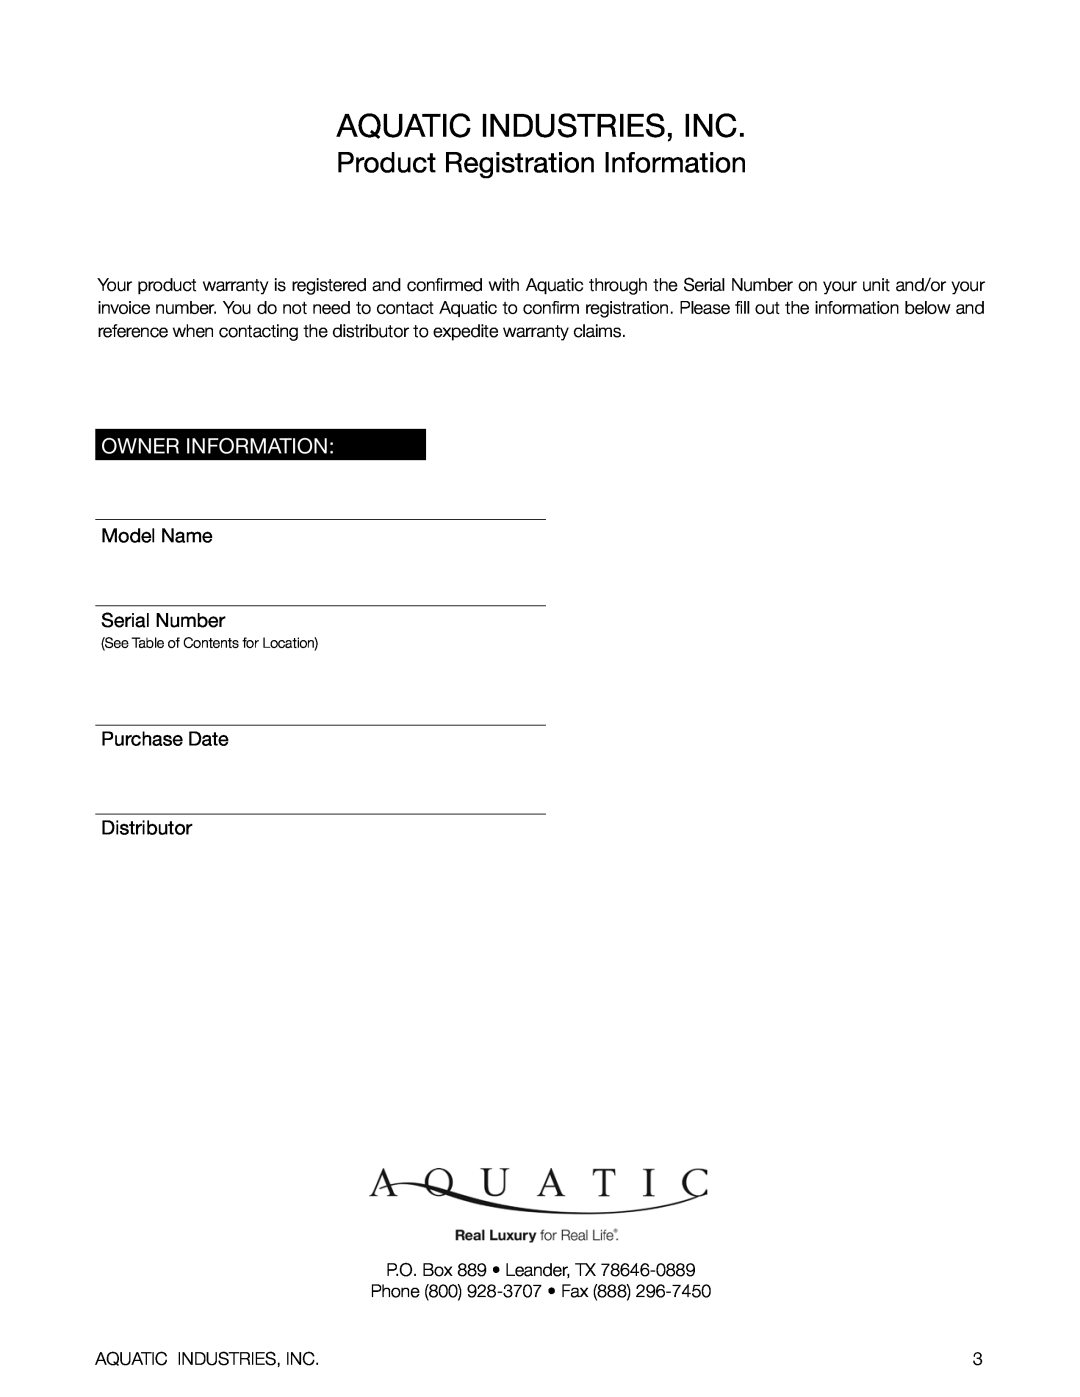 Aquatic Delicair Laundry Basin owner manual Aquatic Industries, Inc, Product Registration Information, Owner Information 